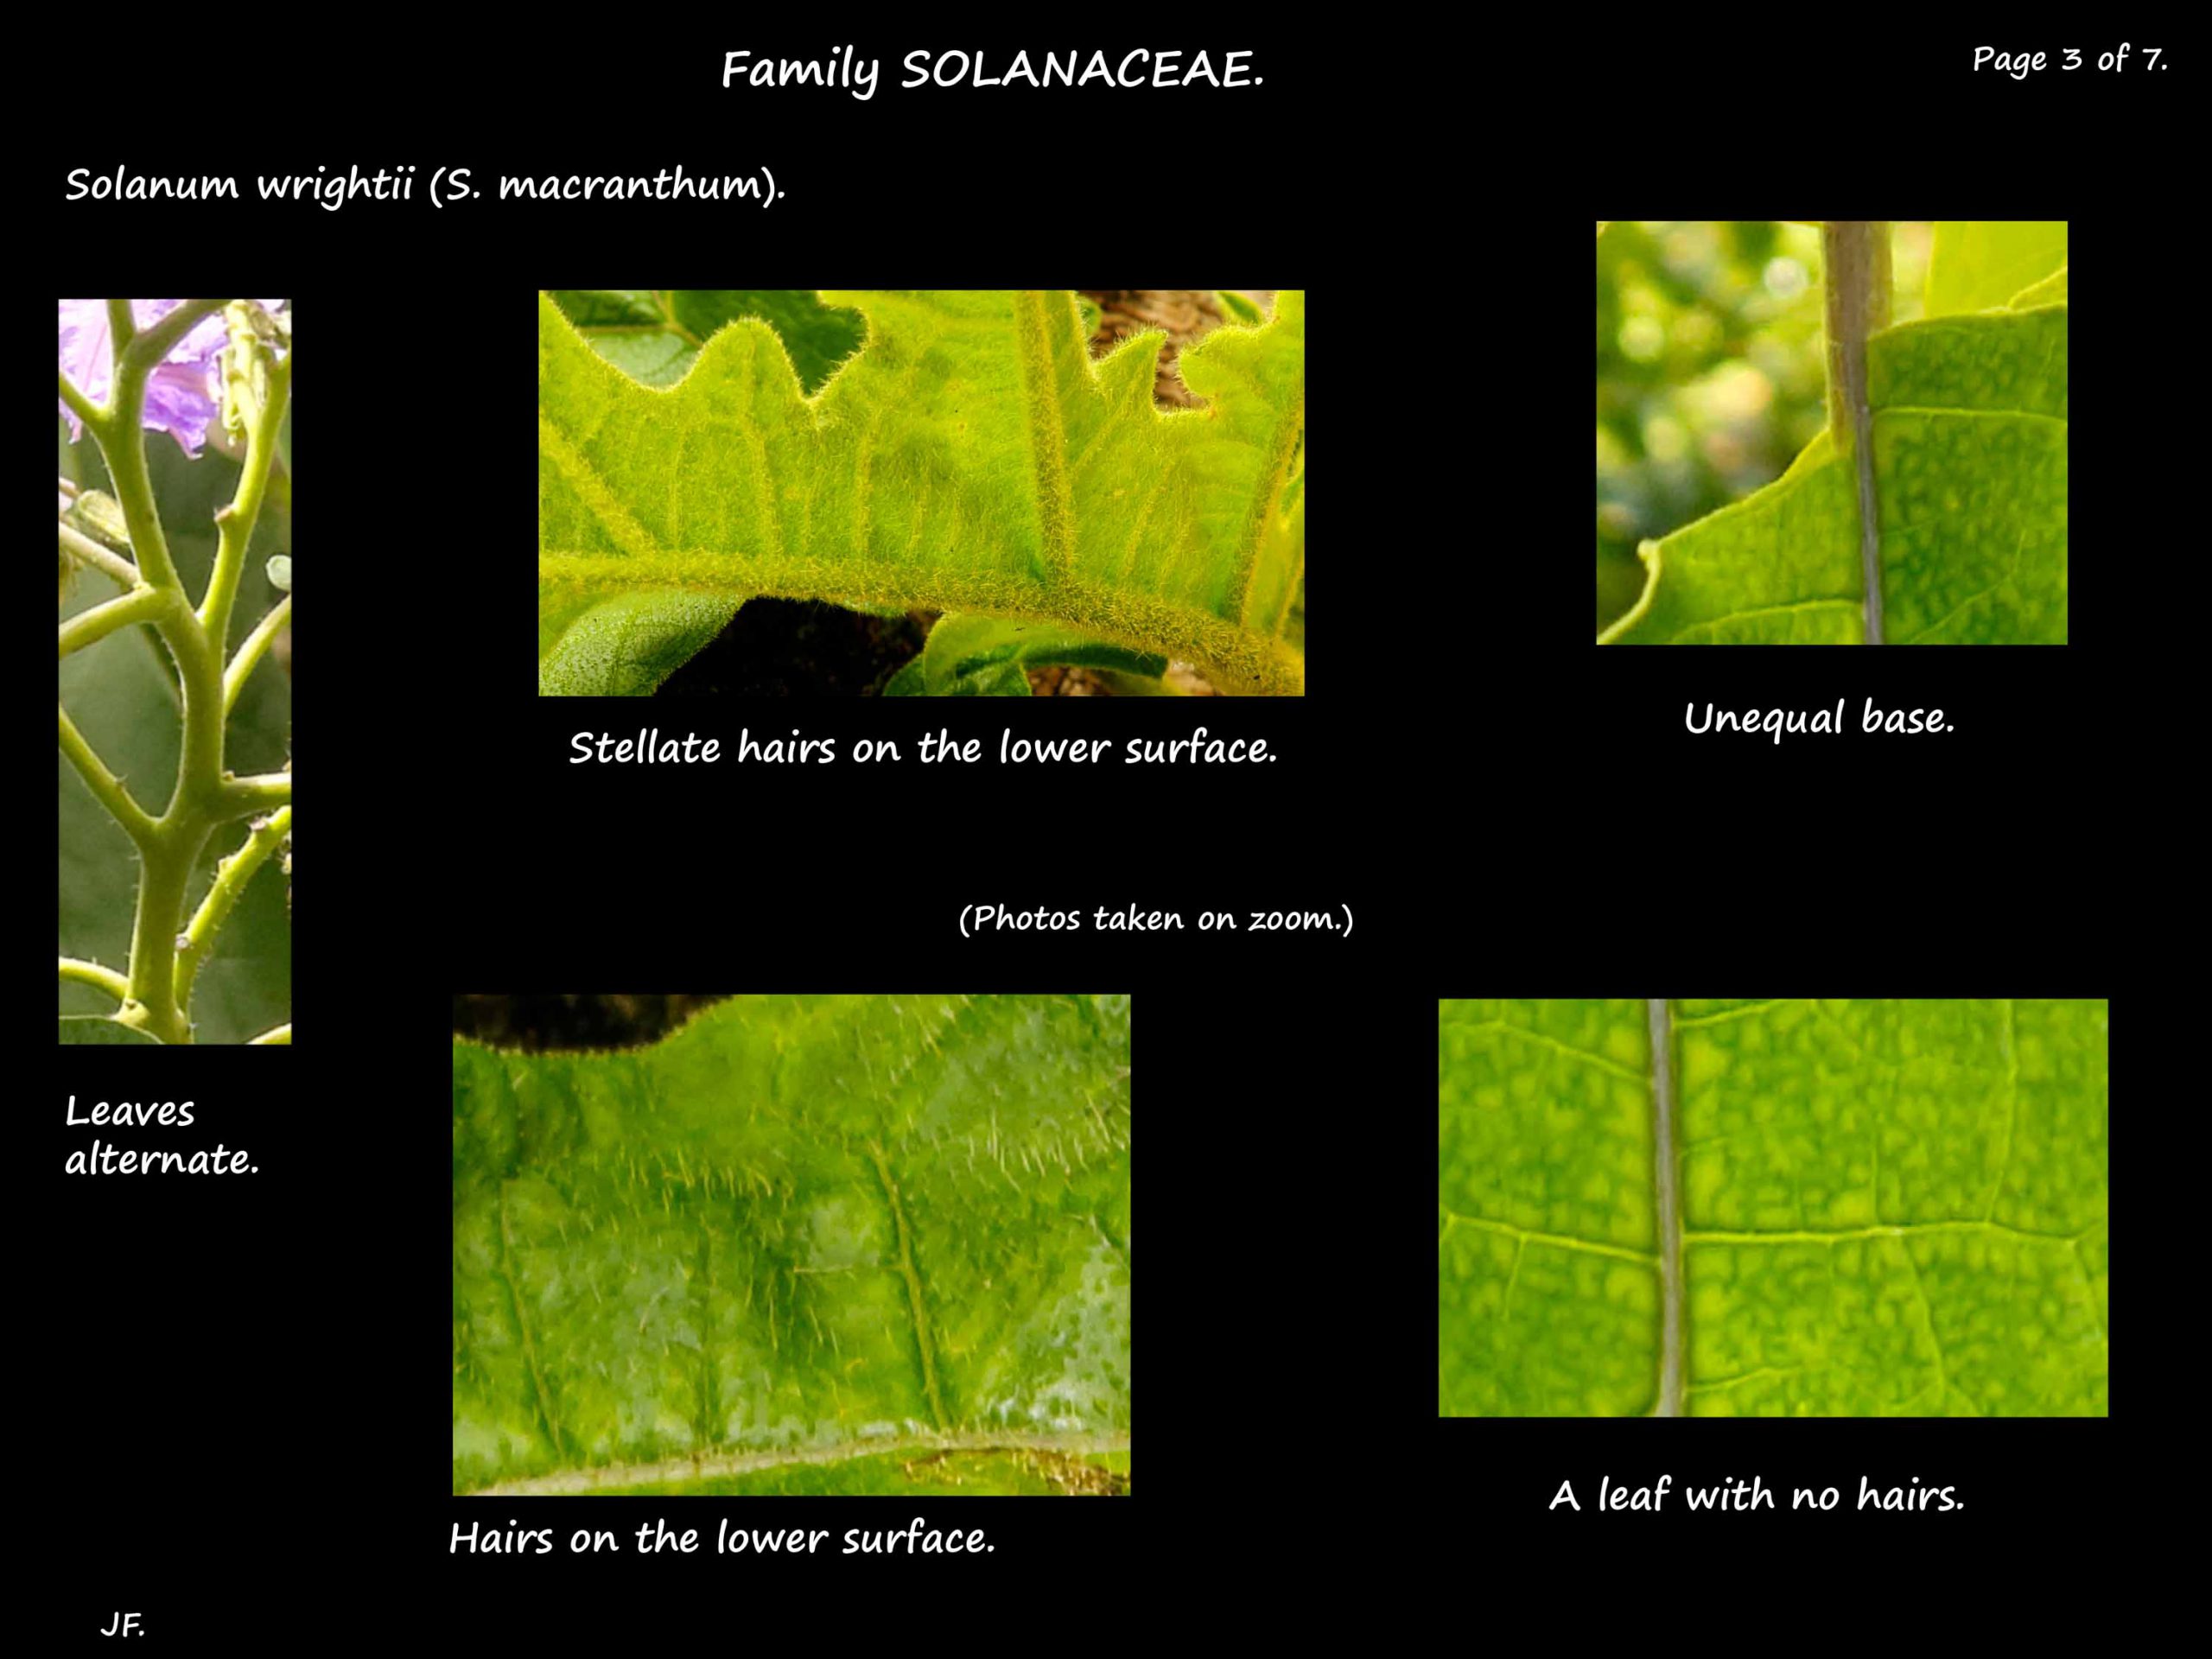 3 Solanum wrightii leaf hairs